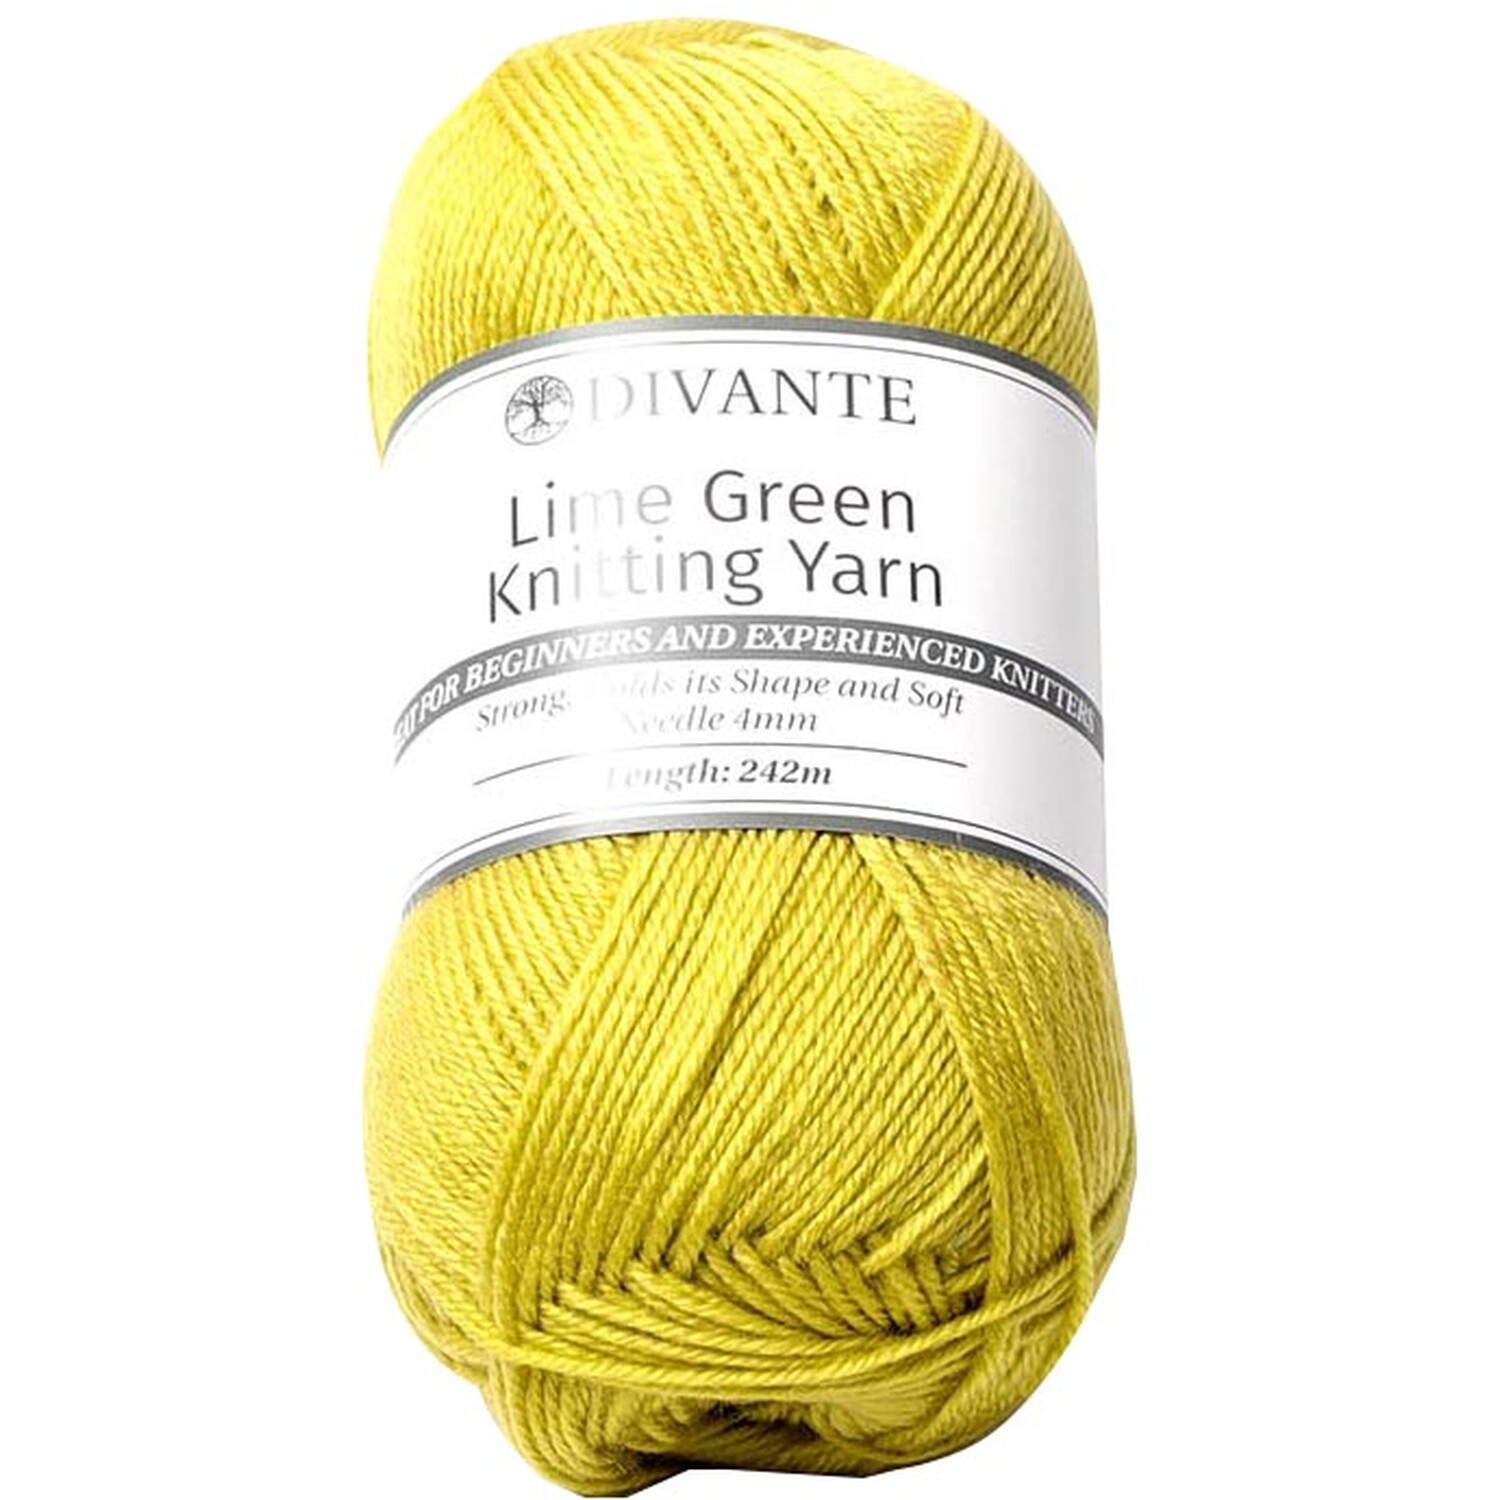 Divante Basic Knitting Yarn - Lime Green Image